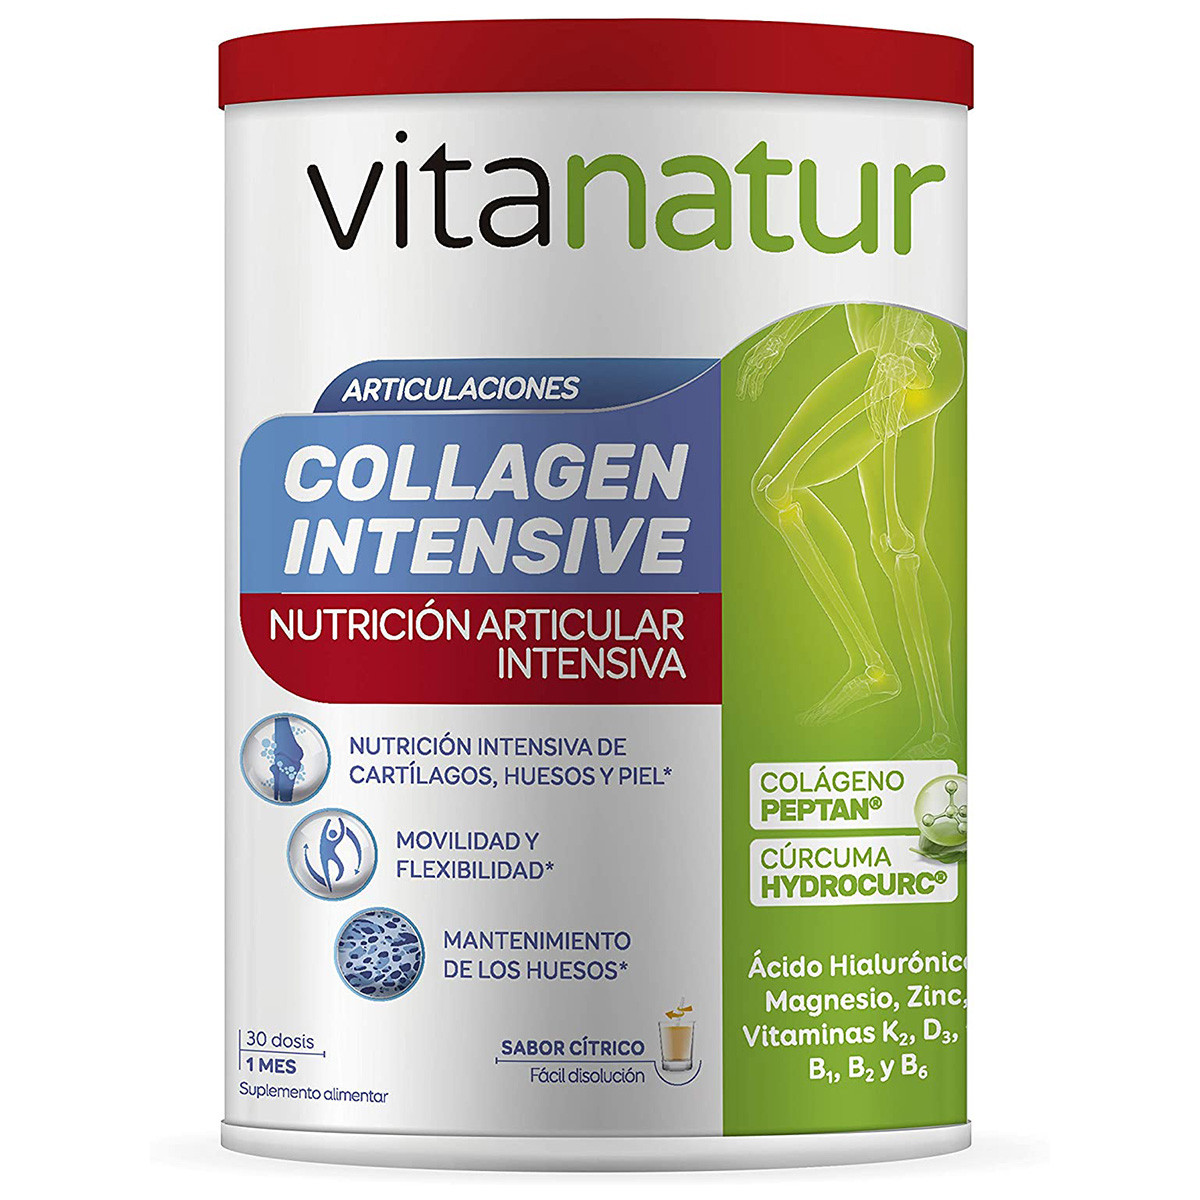 Imagen de Vitanatur collagen intensive 360 gr